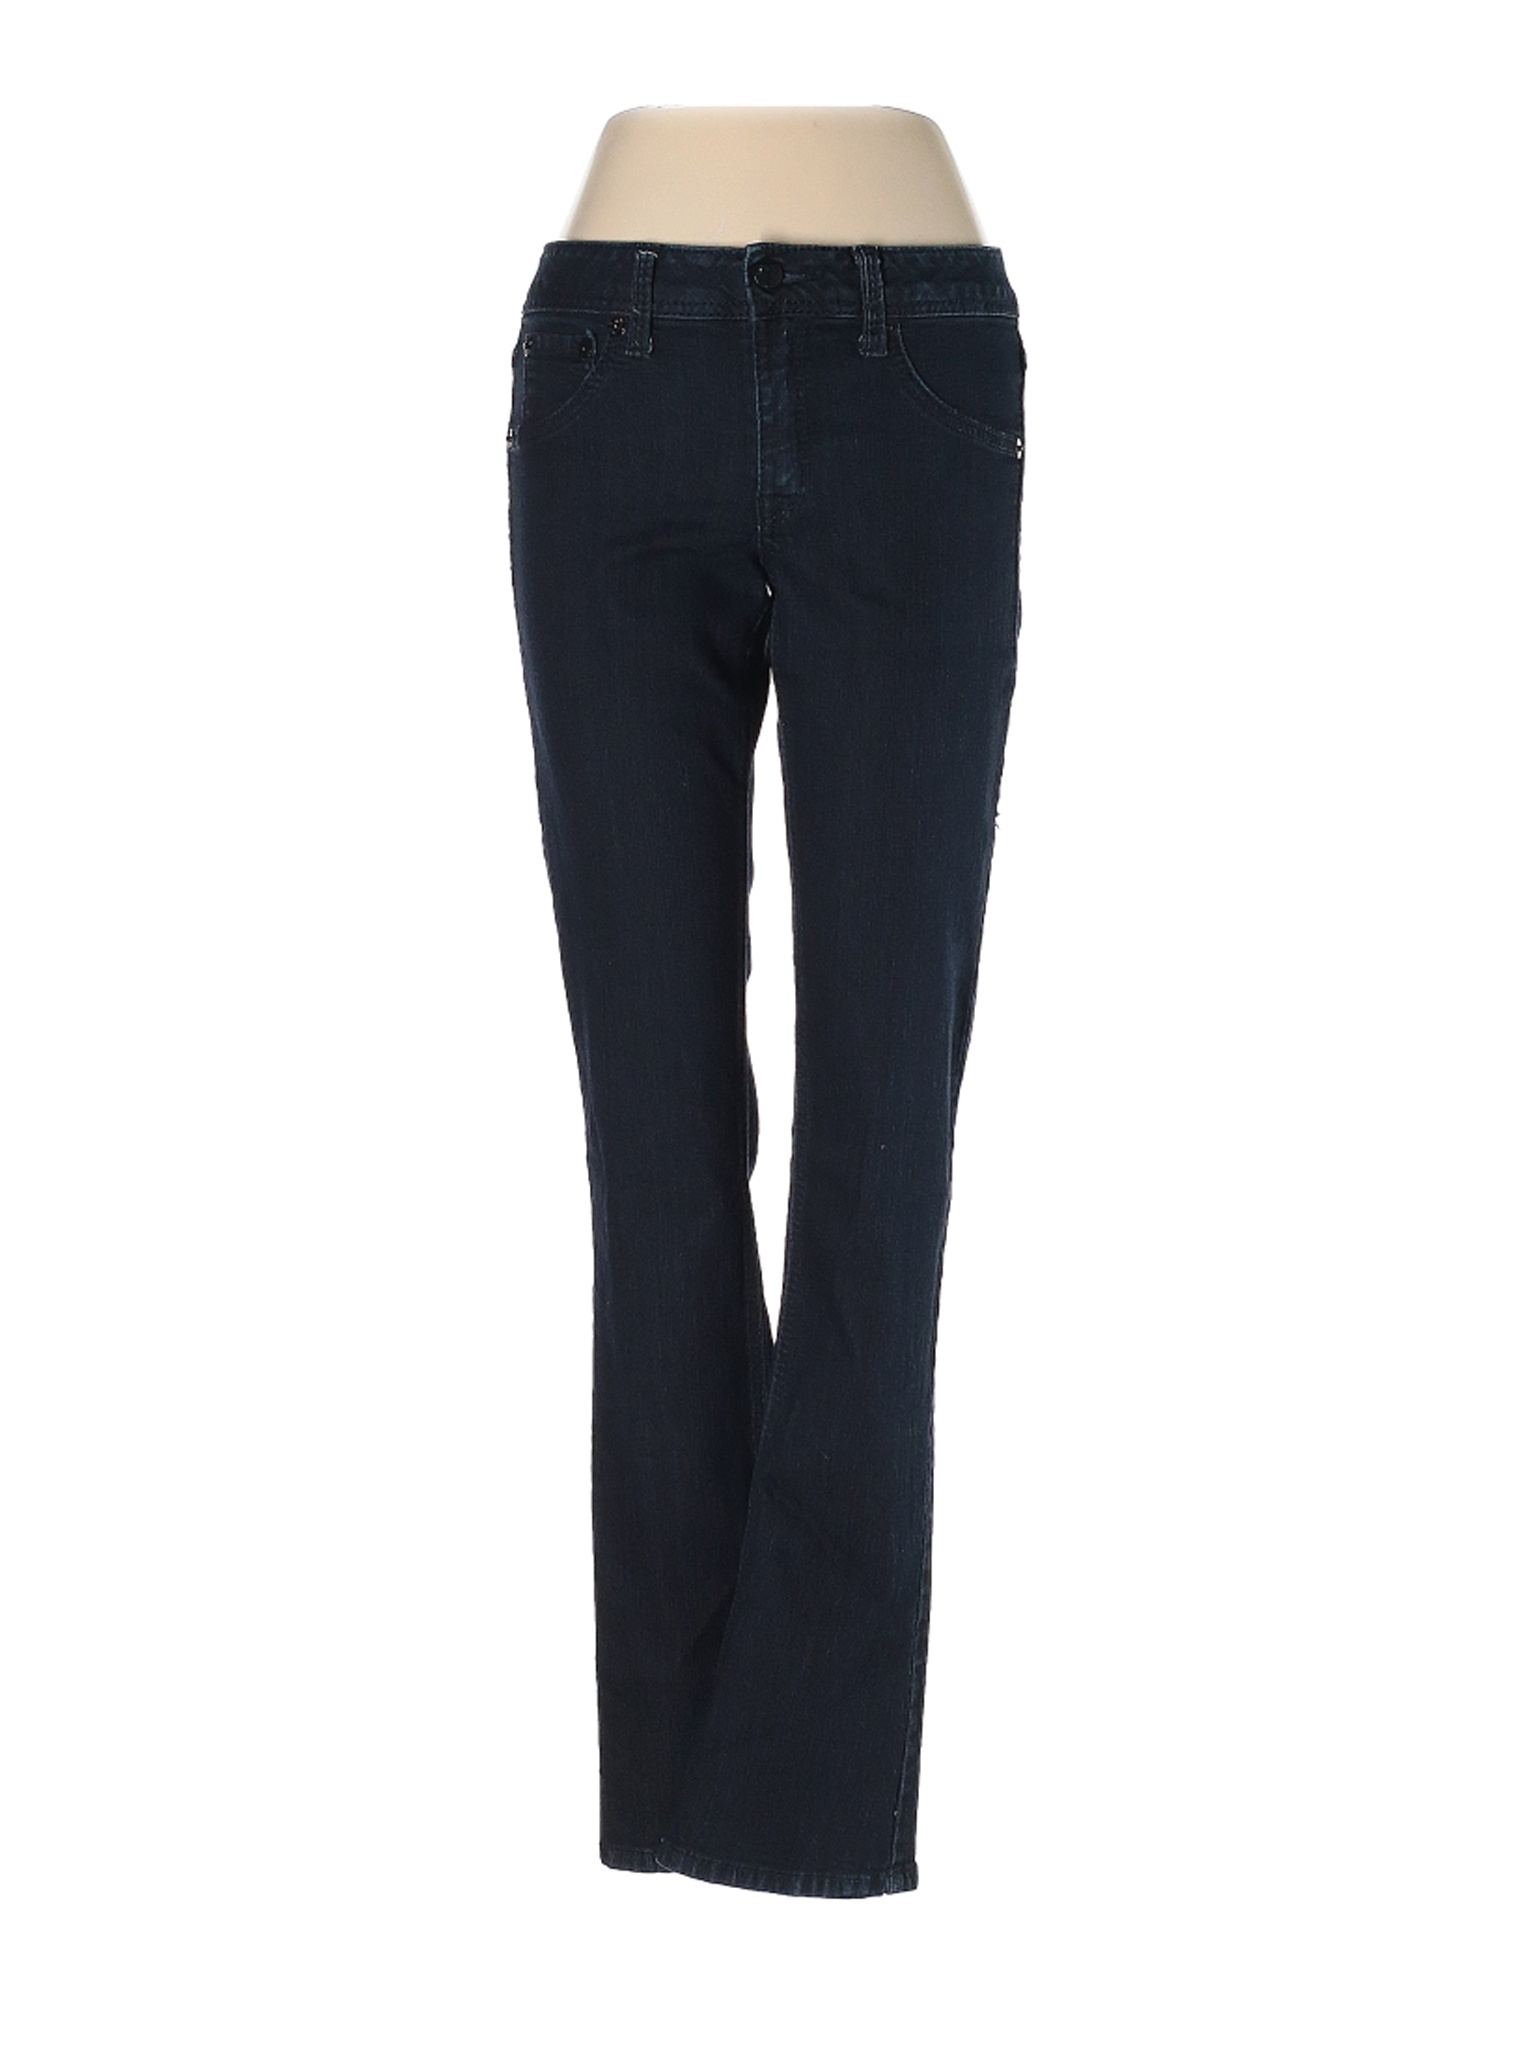 17/21 Exclusive Denim Women Blue Jeans 4 | eBay